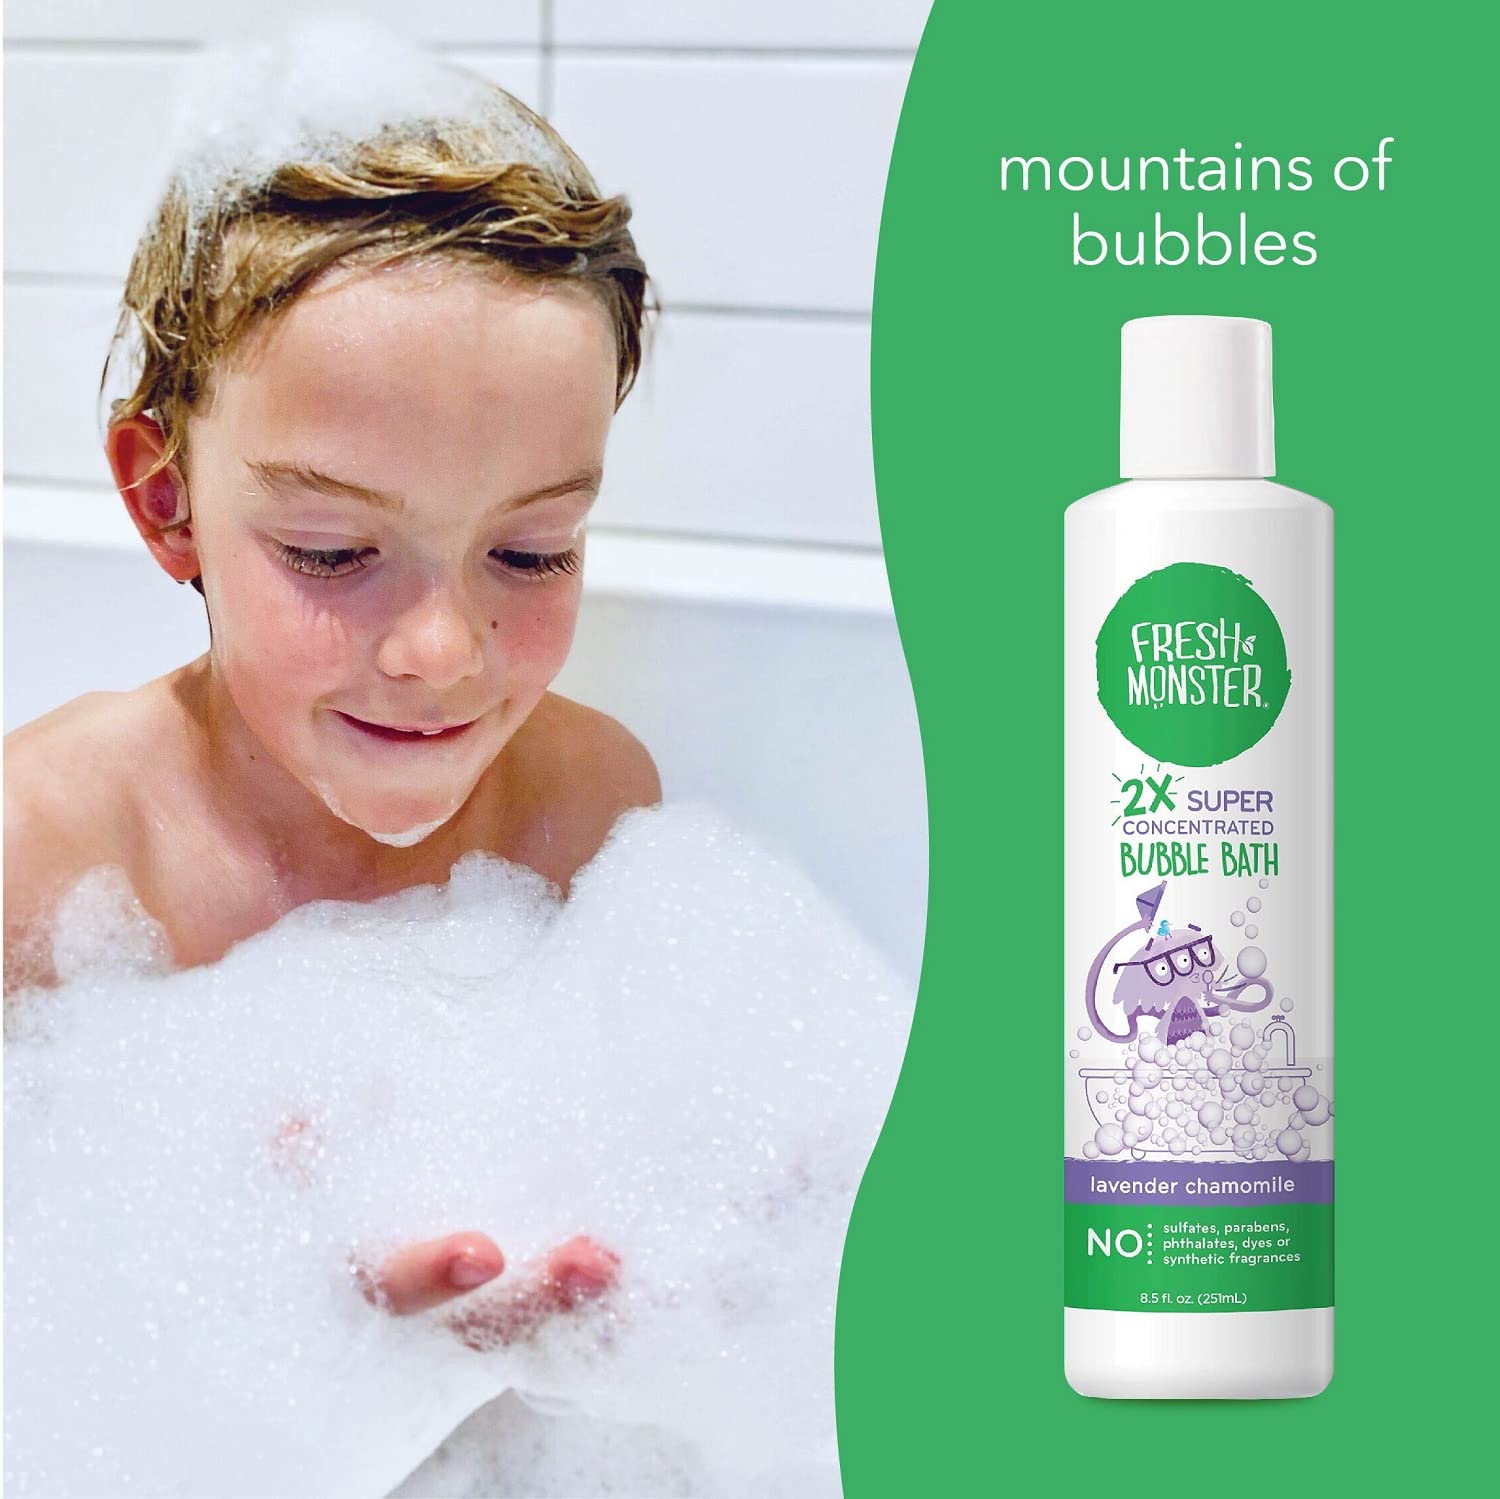 Fresh Monster Kids Bubble Bath, 2X Super Concentrated Bubble Bath for Kids, Hypoallergenic, Calming Lavender (1 Count, 8.5oz)